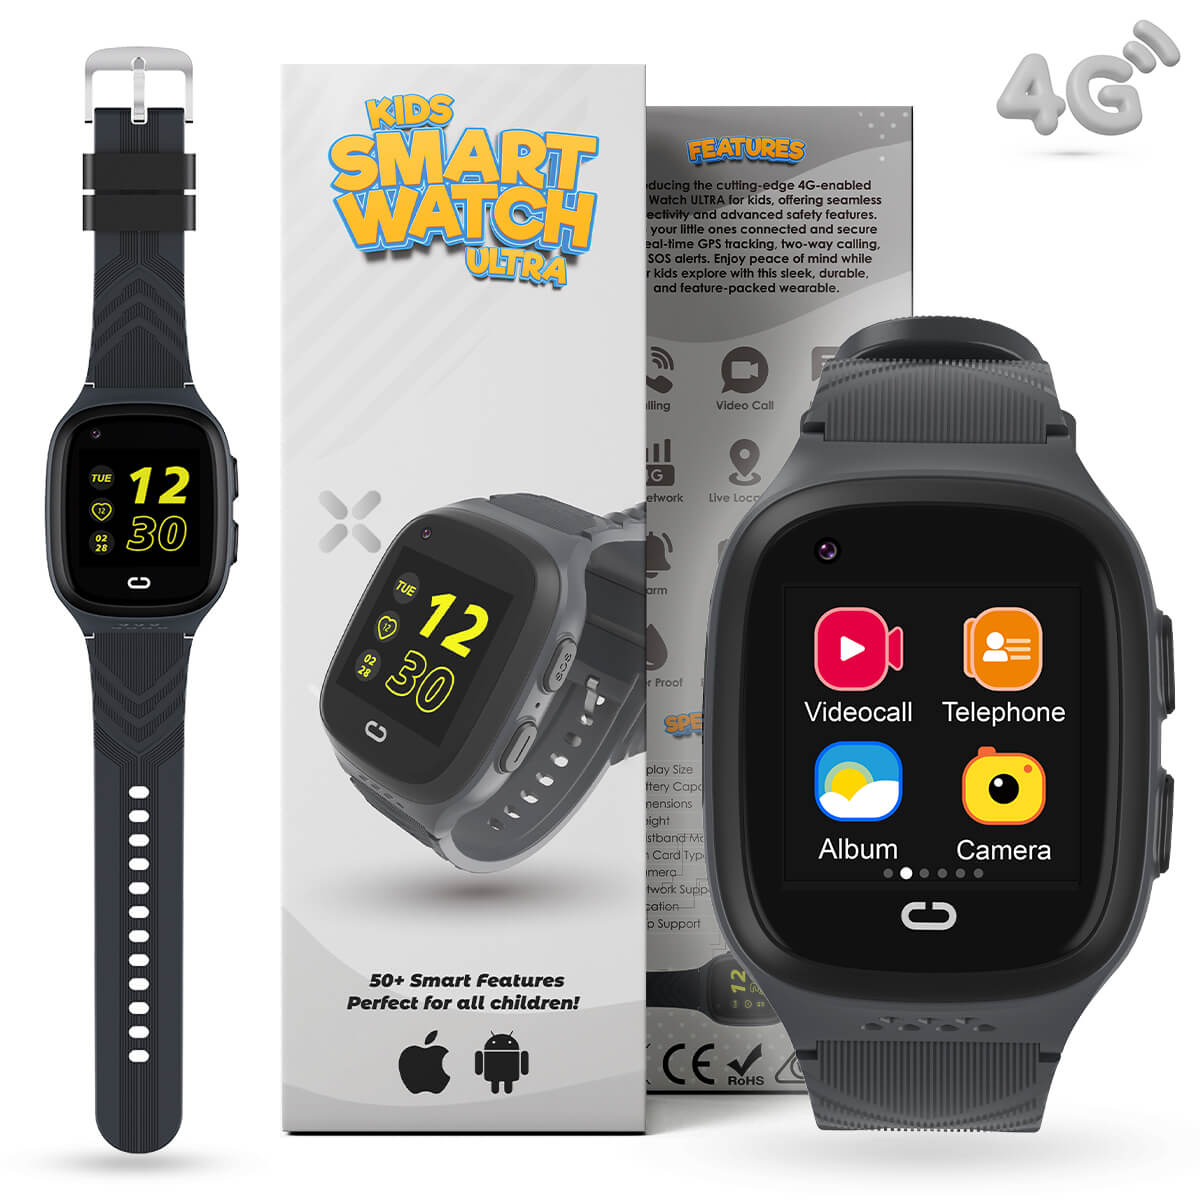 4G Kids Smart Watch ULTRA - AGPS, Video Call, SOS, Games *New Model*